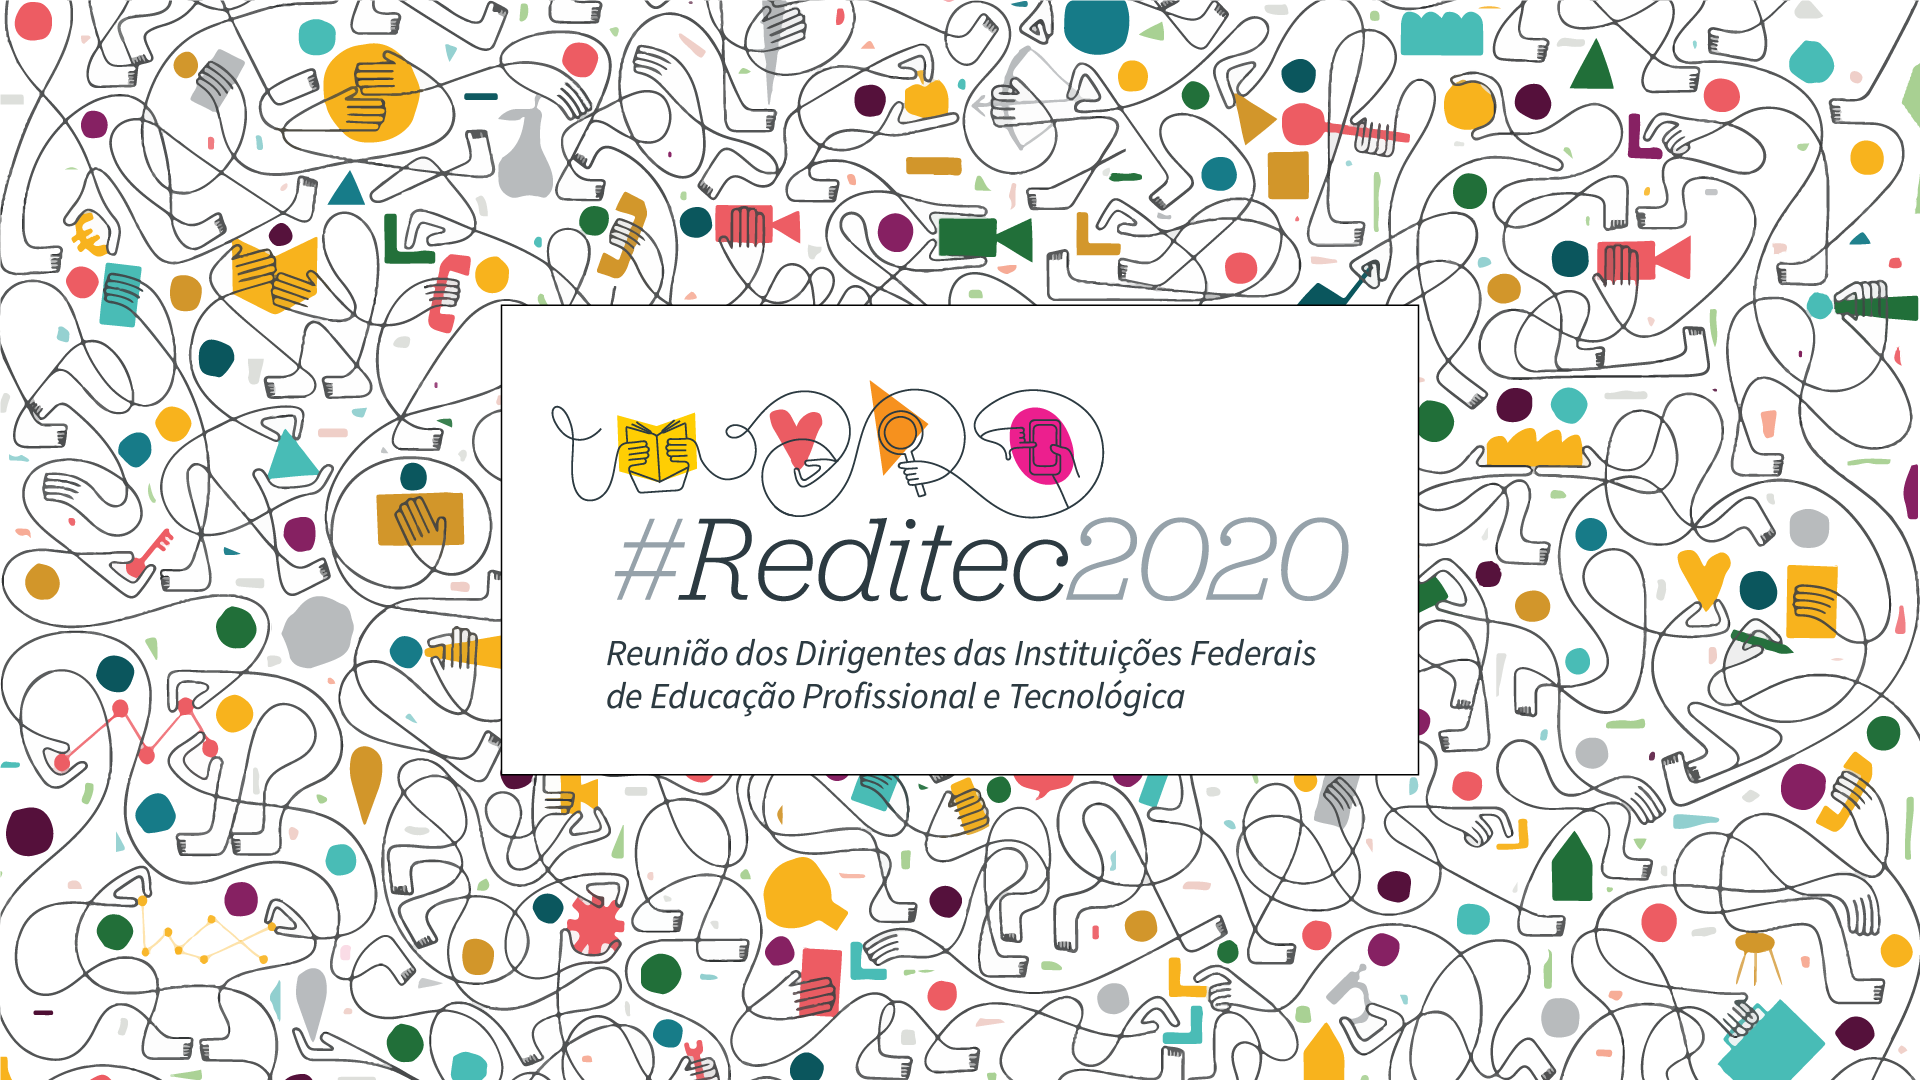 reditec-2020-01-01.png - 981.76 kb